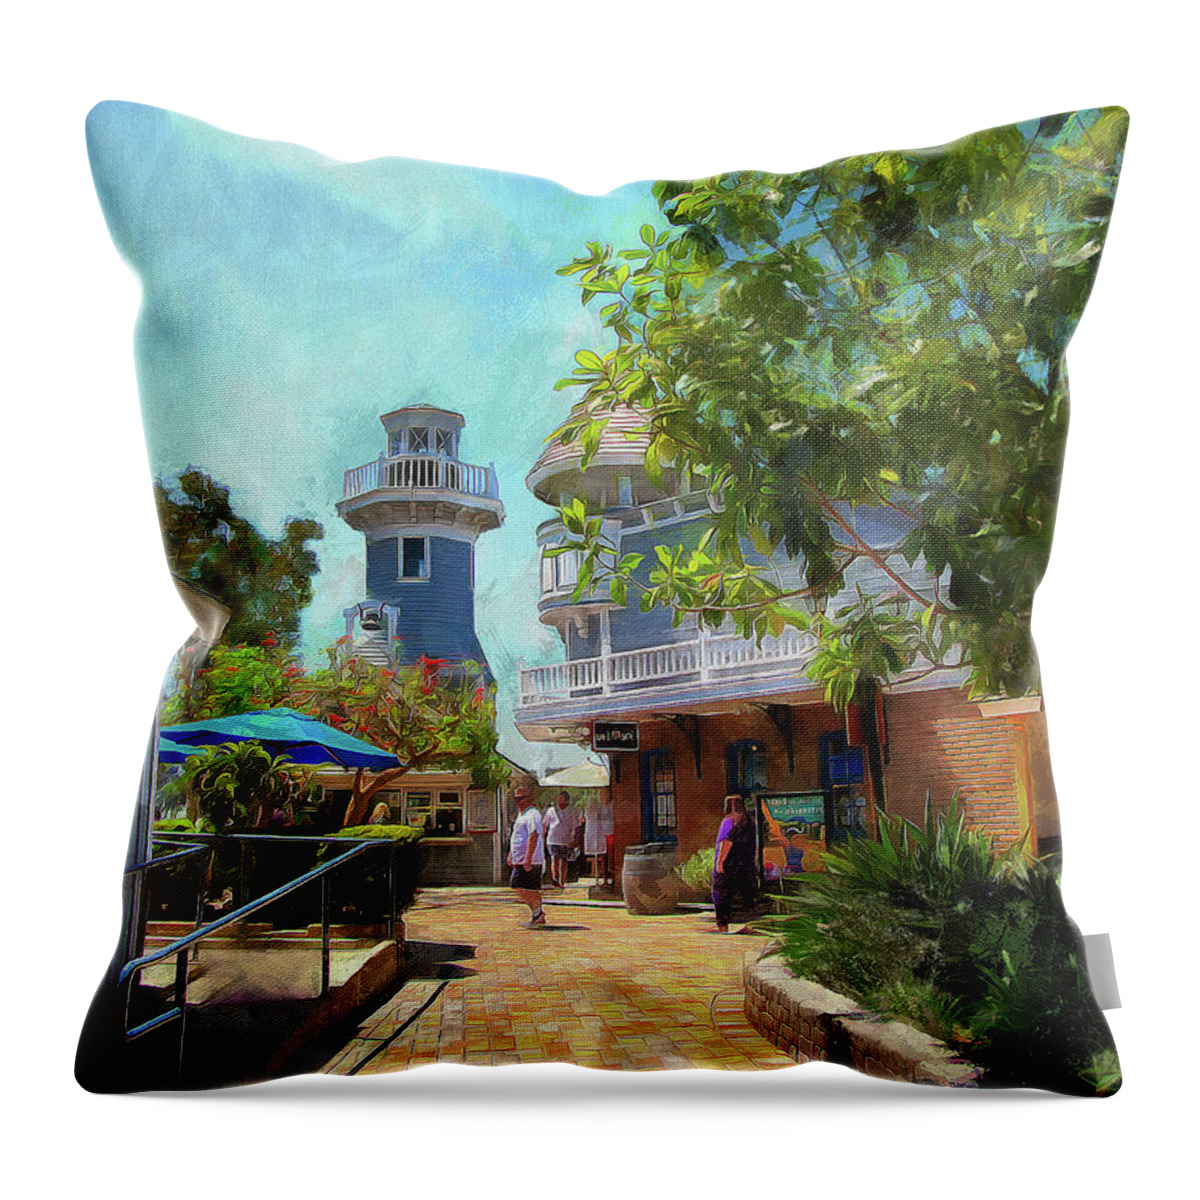 Cedric Hampton Throw Pillow featuring the photograph Lighthouse At Seaport Village by Cedric Hampton